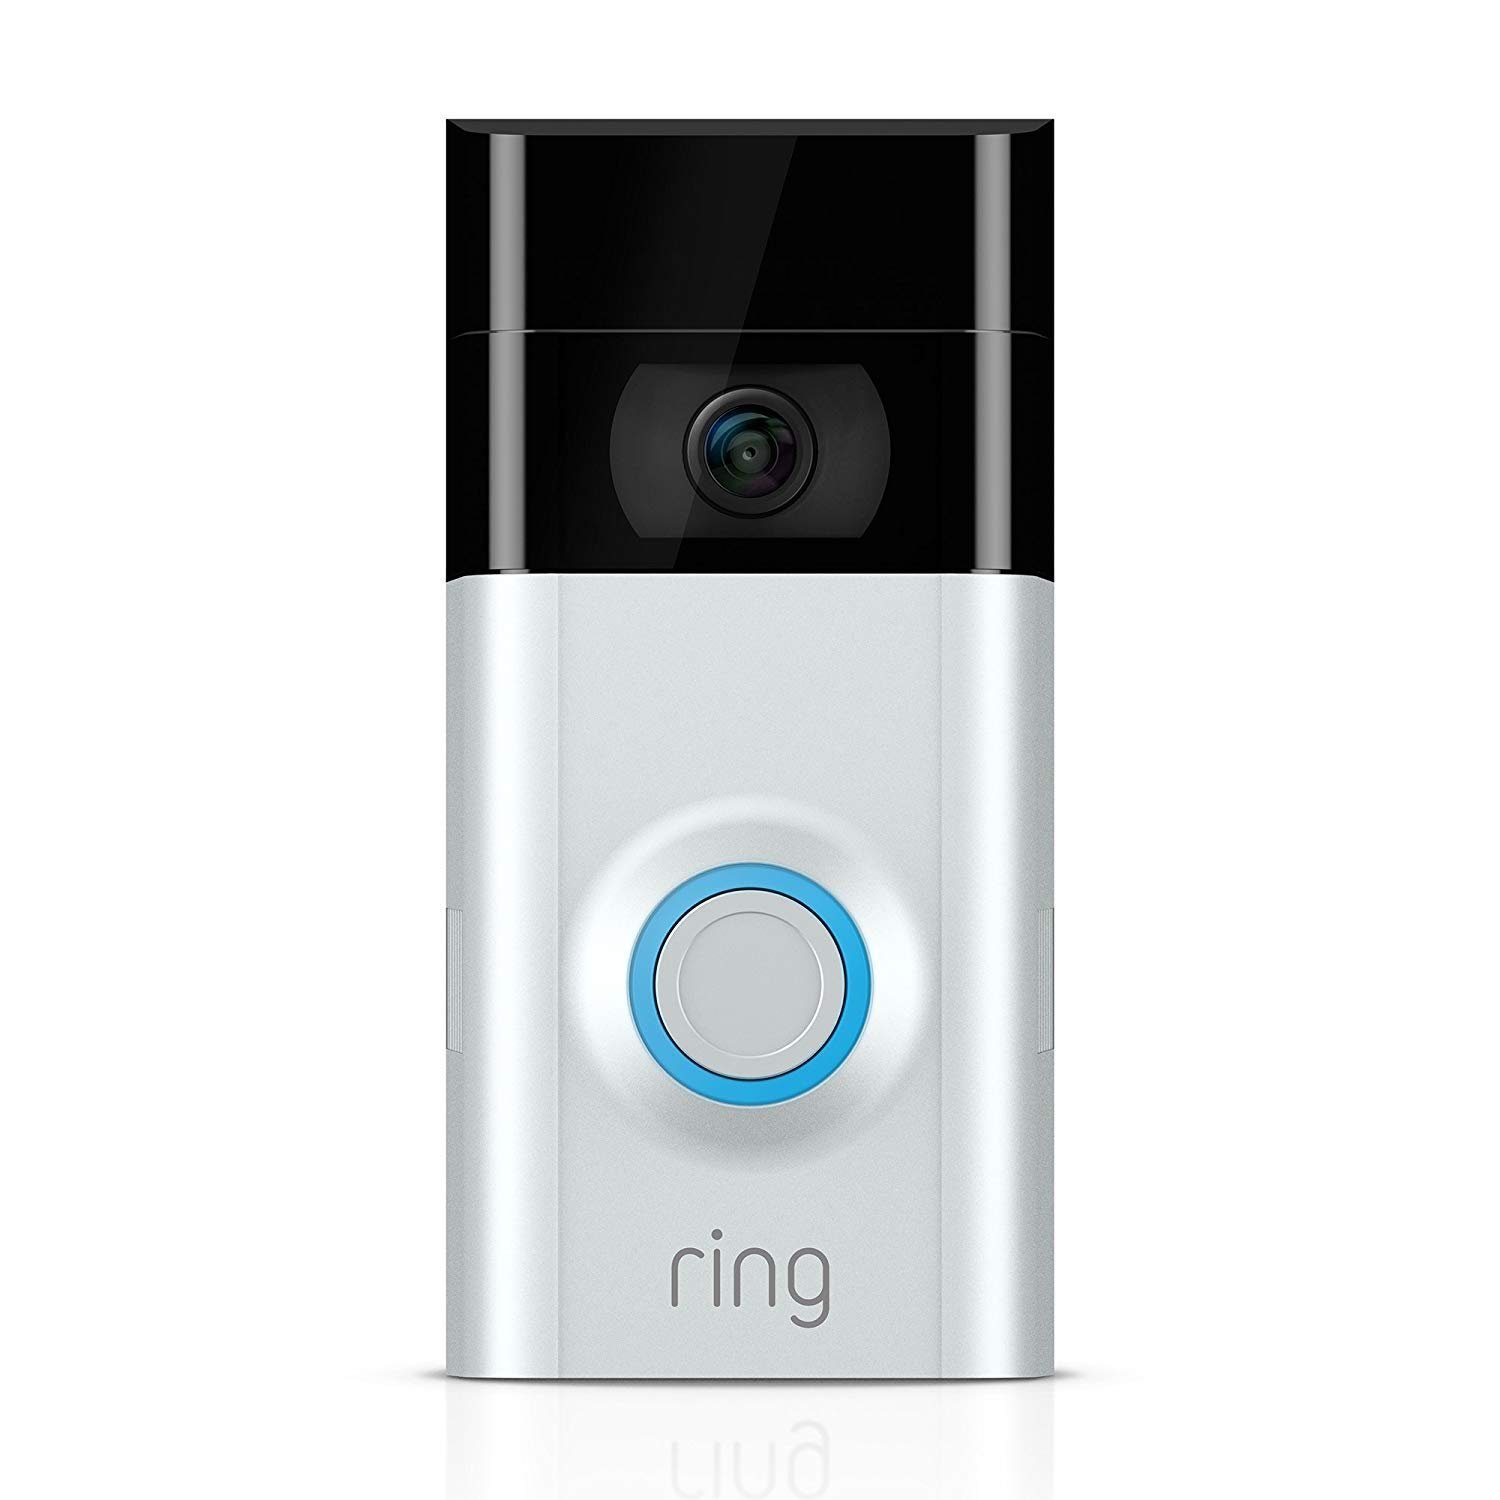 Ring »Video Doorbell 2, Video Türklingel 2 1080p HD-Video,  Gegensprechfunktion, Bewegungsmelder, WLAN, Satin Nickel - Retourenware«  Video-Türsprechanlage online kaufen | OTTO